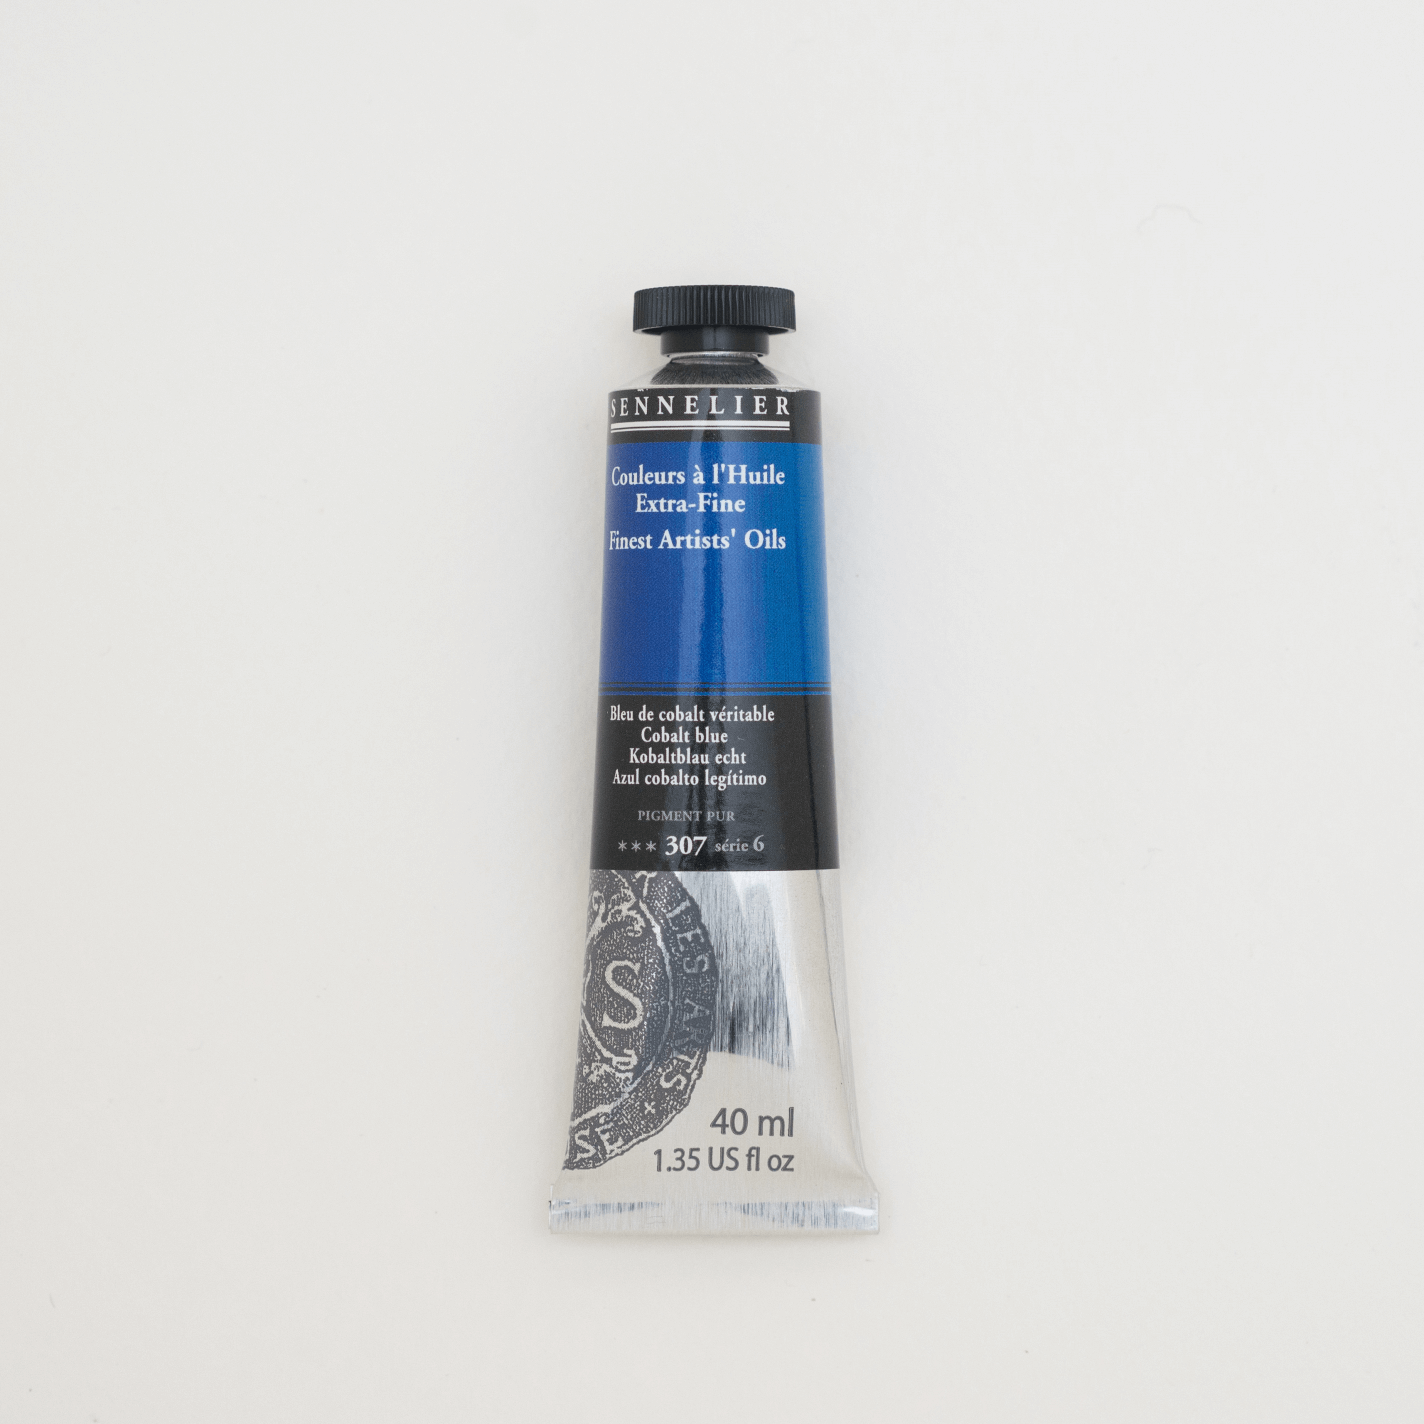 Sennelier Oliemaling 40ml Cobalt Blue